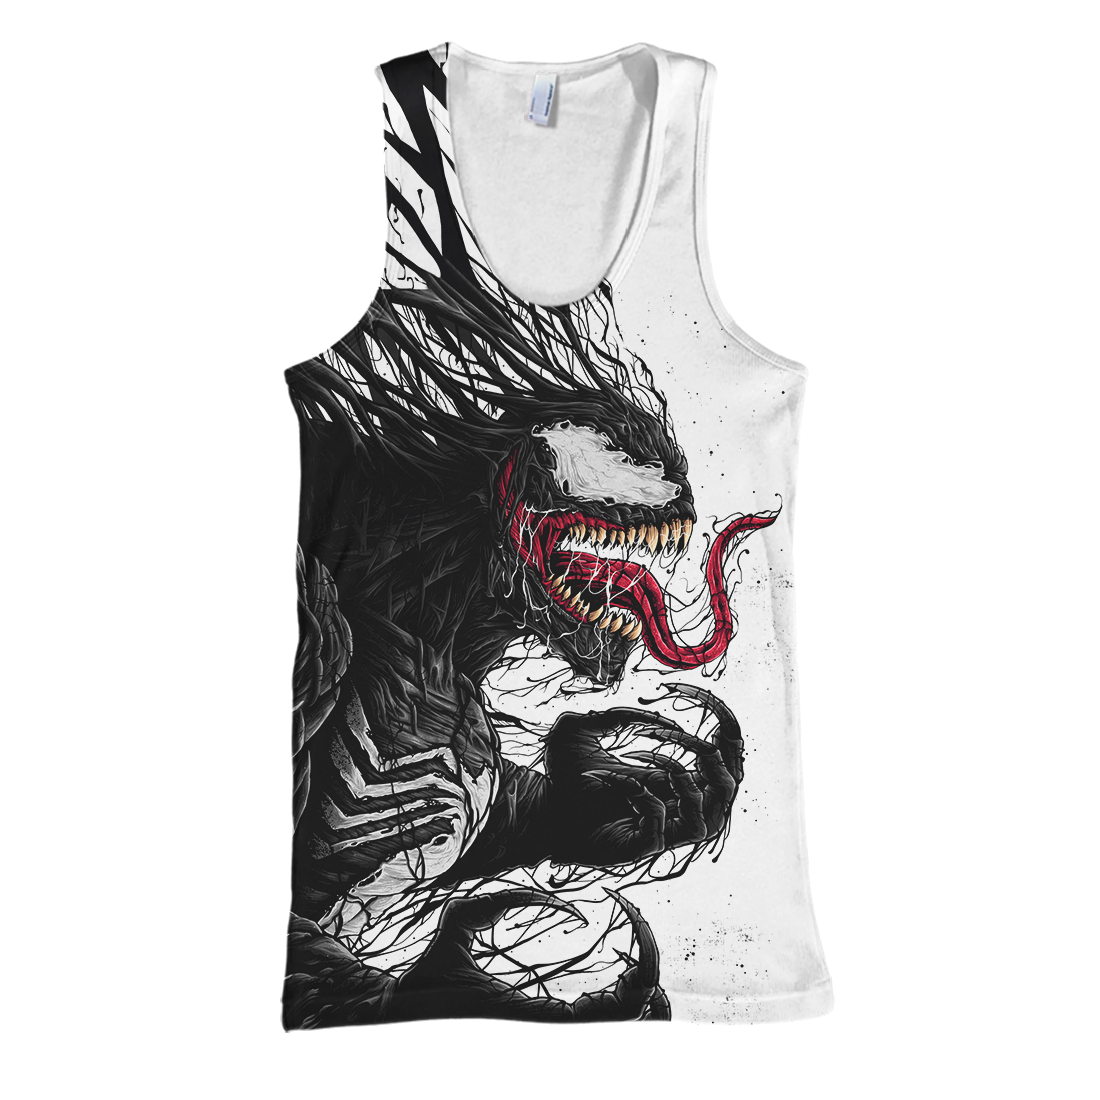 Unifinz Venom Hoodie Black & White Adult New Carnage T Shirt MV Venom Shirt Sweater Tank 2026